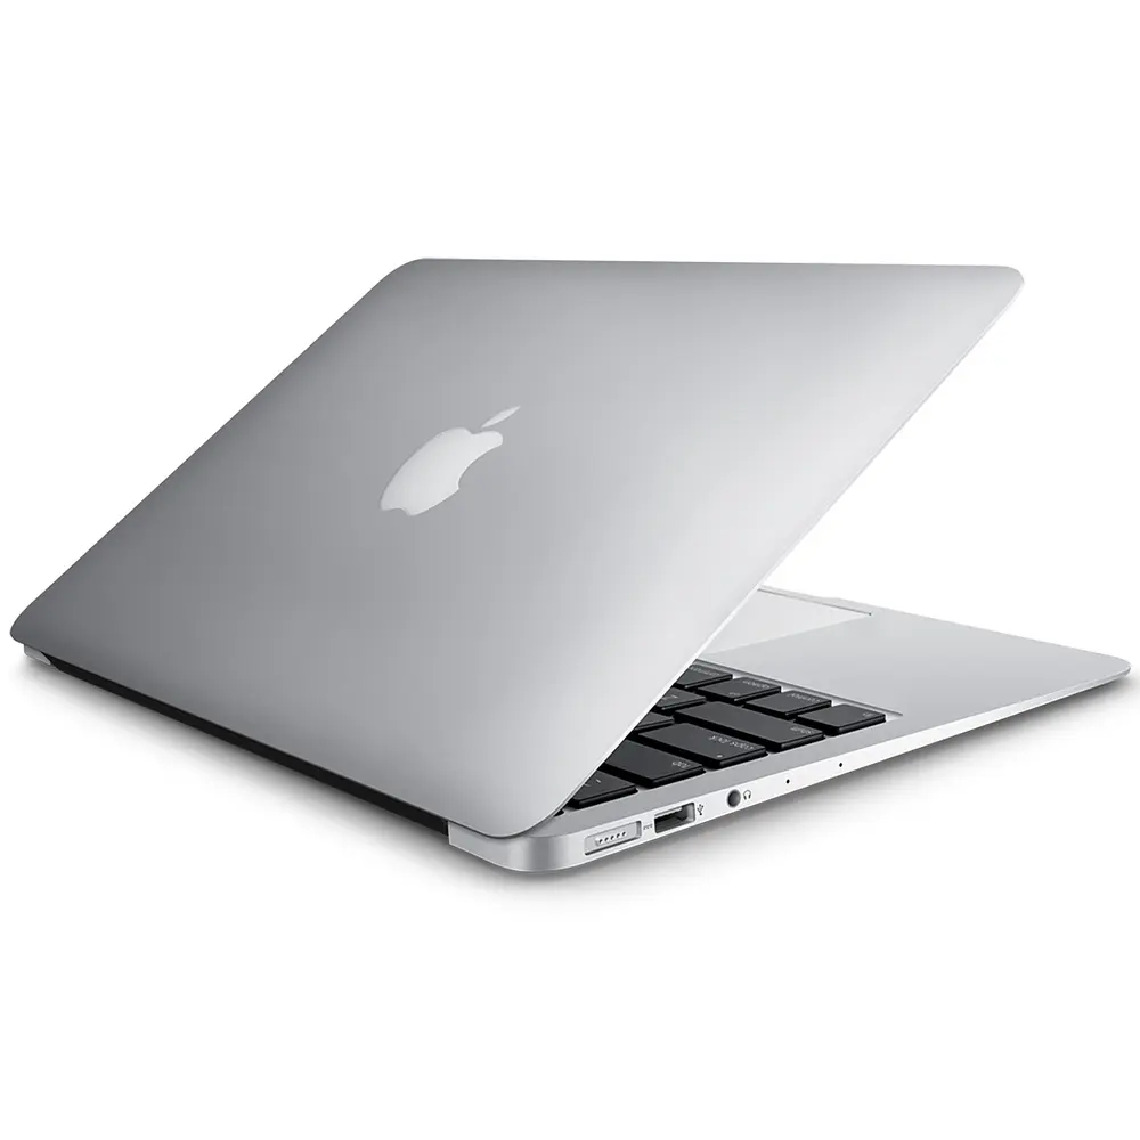 Apple - MacBook Air 13.3'' i5-4250U 4Go 128Go SSD -2013 - MacBook